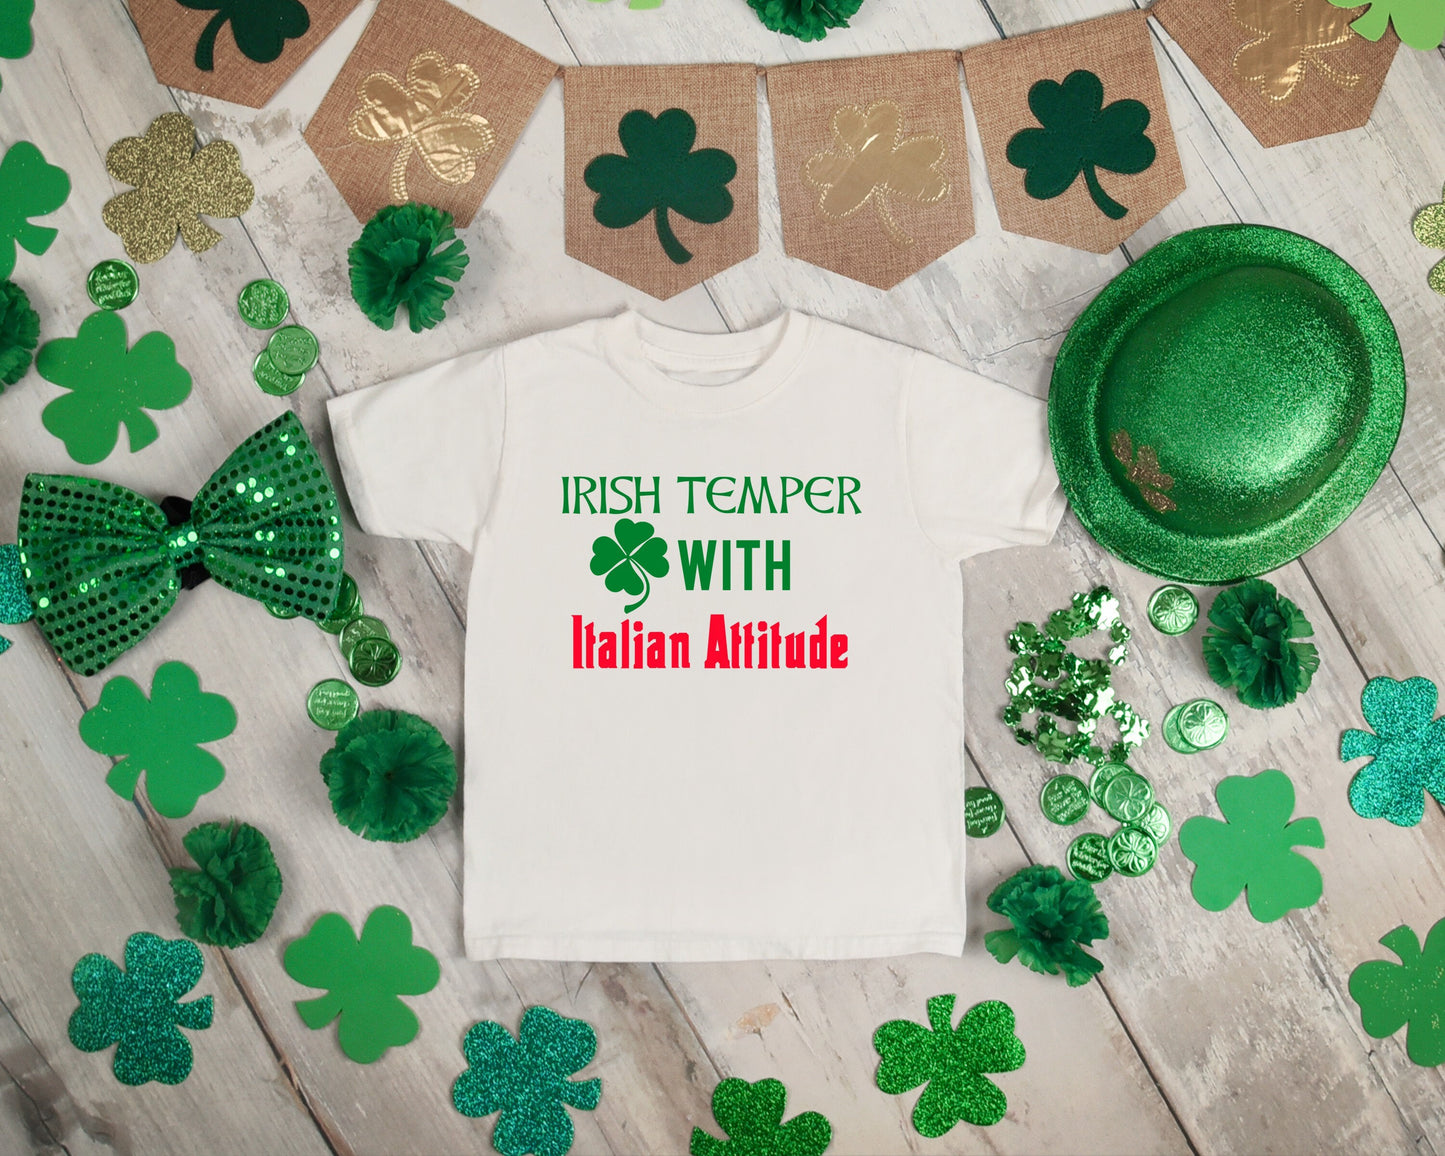 Irish Temper with Italian Attitude Infant, Toddler or Youth Shirt or Bodysuit - Irish Italian Shirt - St Patrick's Day Tee - Toddler Shirt